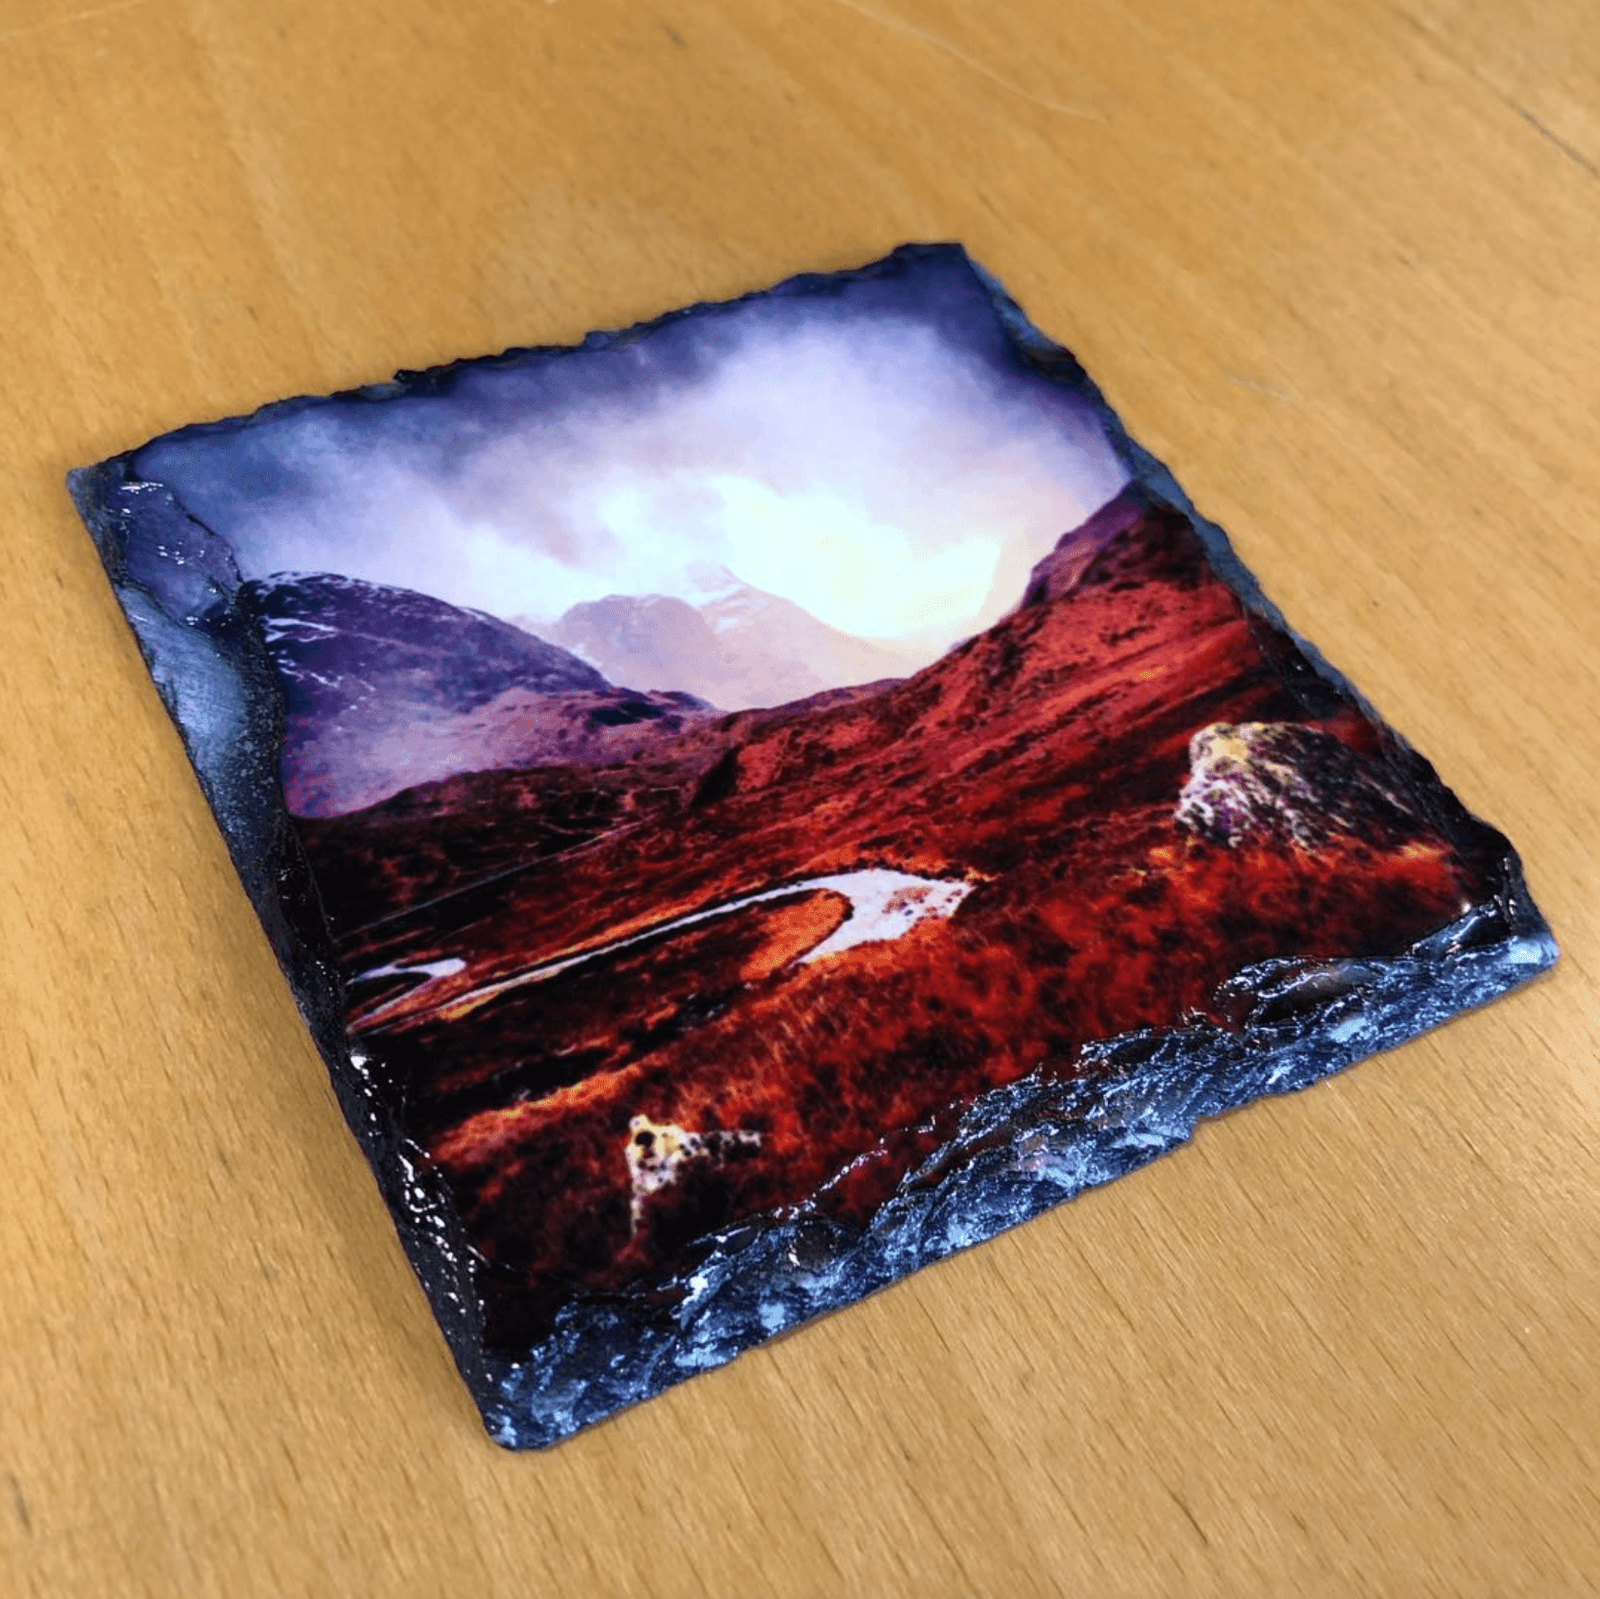 Loch Lomond Moonlight Scottish Slate Art-Slate Art-Scottish Lochs & Mountains Art Gallery-Paintings, Prints, Homeware, Art Gifts From Scotland By Scottish Artist Kevin Hunter